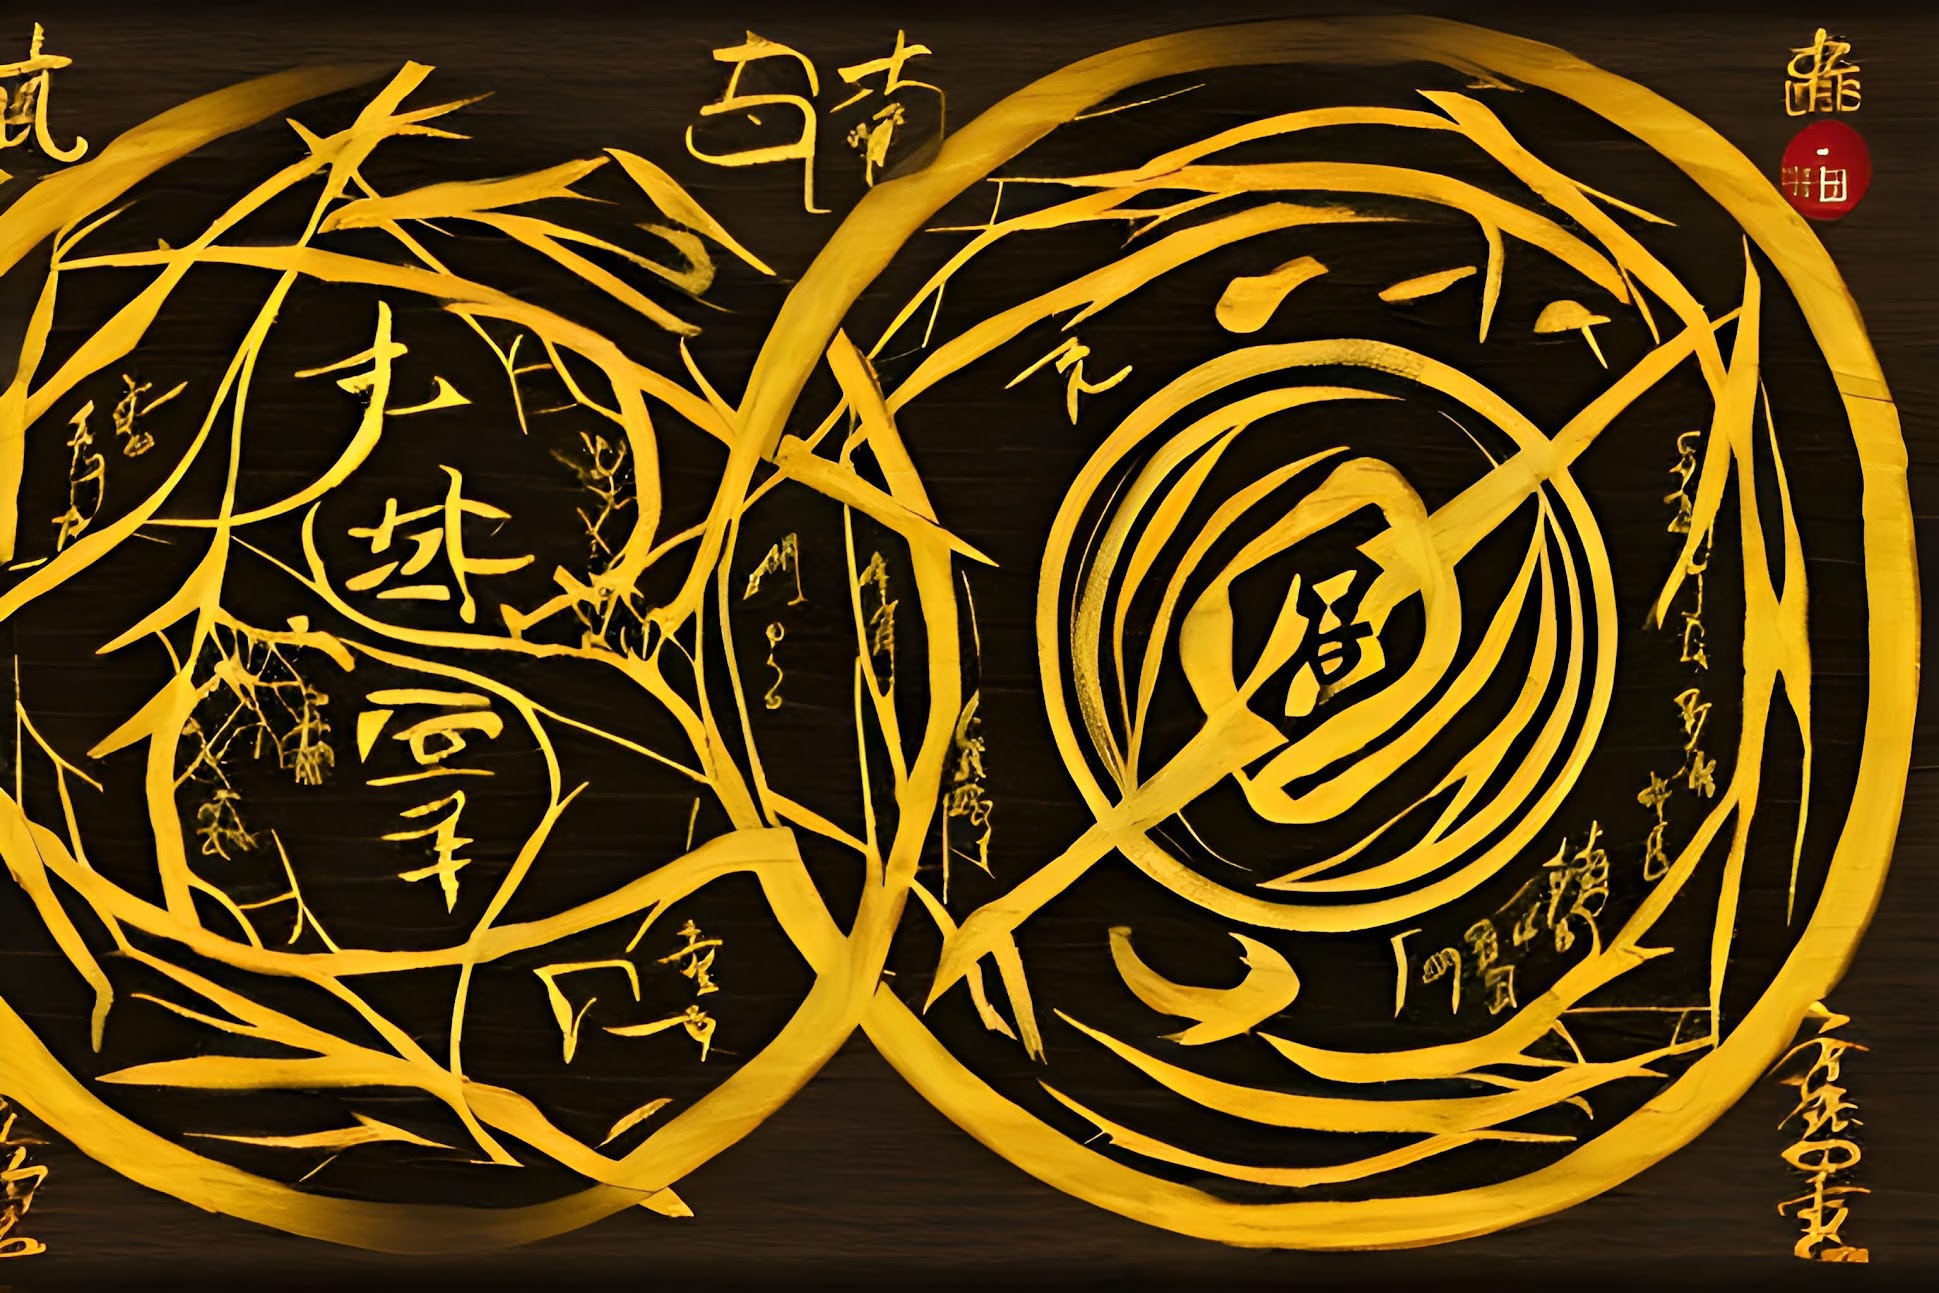 Représentation symbolique et artistique du Tai Chi